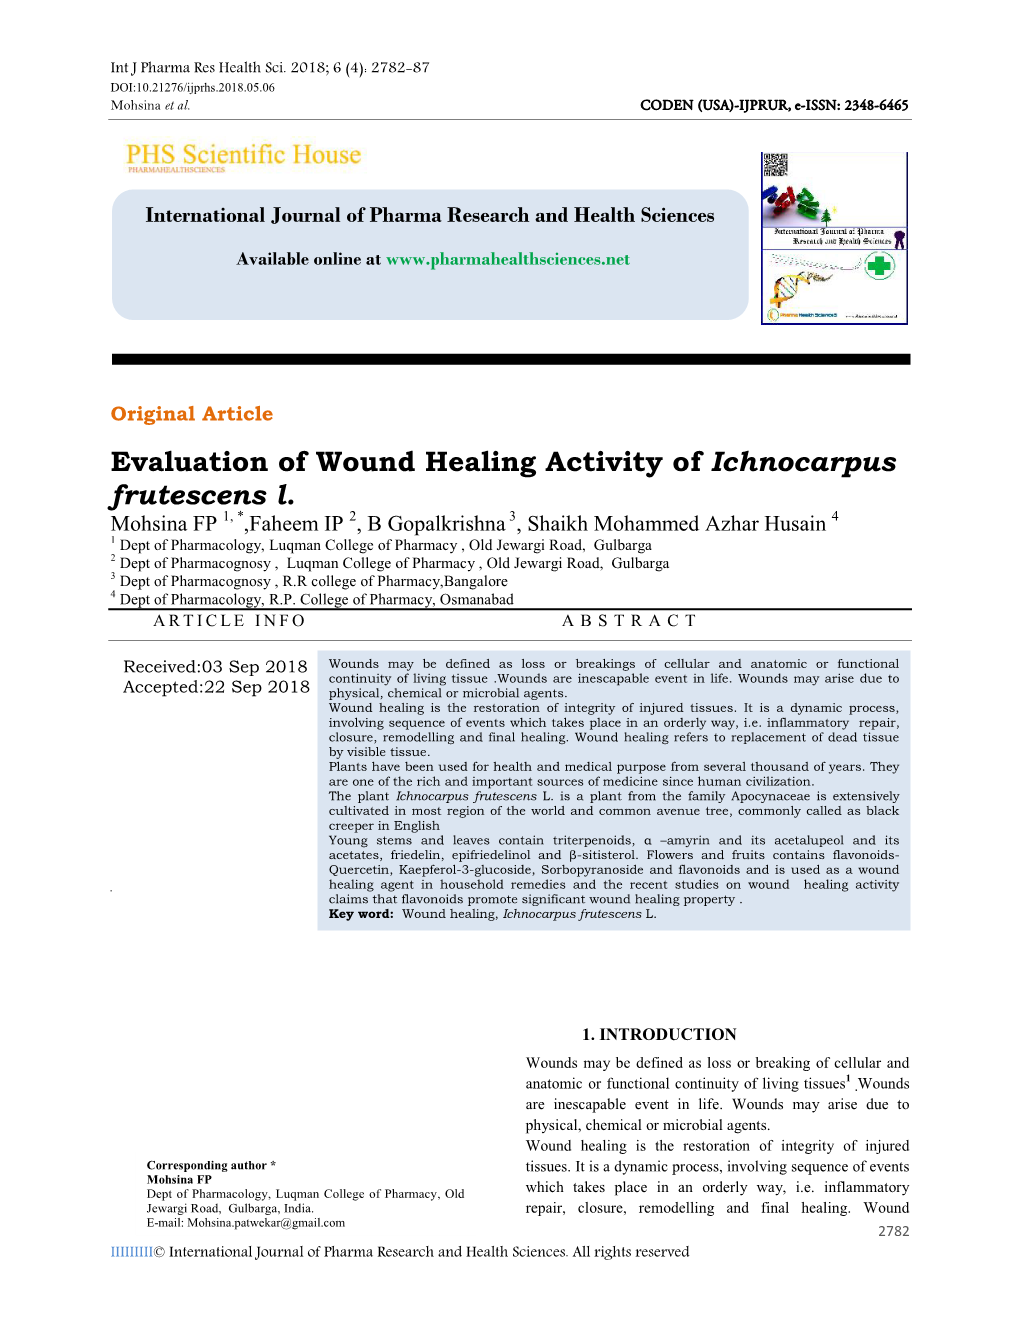 Evaluation of Wound Healing Activity of Ichnocarpus Frutescens L